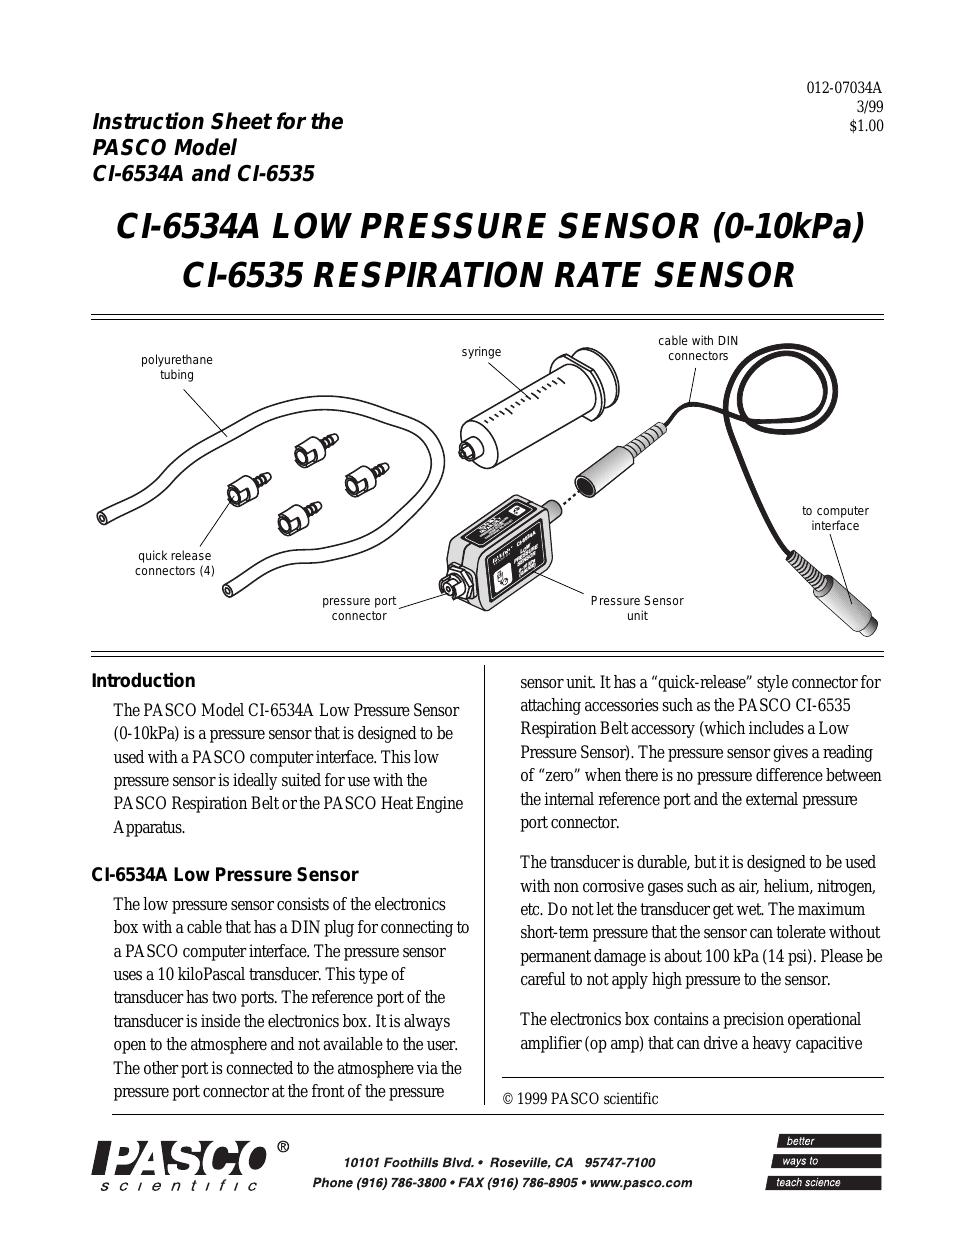 CI-6535 RESPIRATION RATE SENSOR